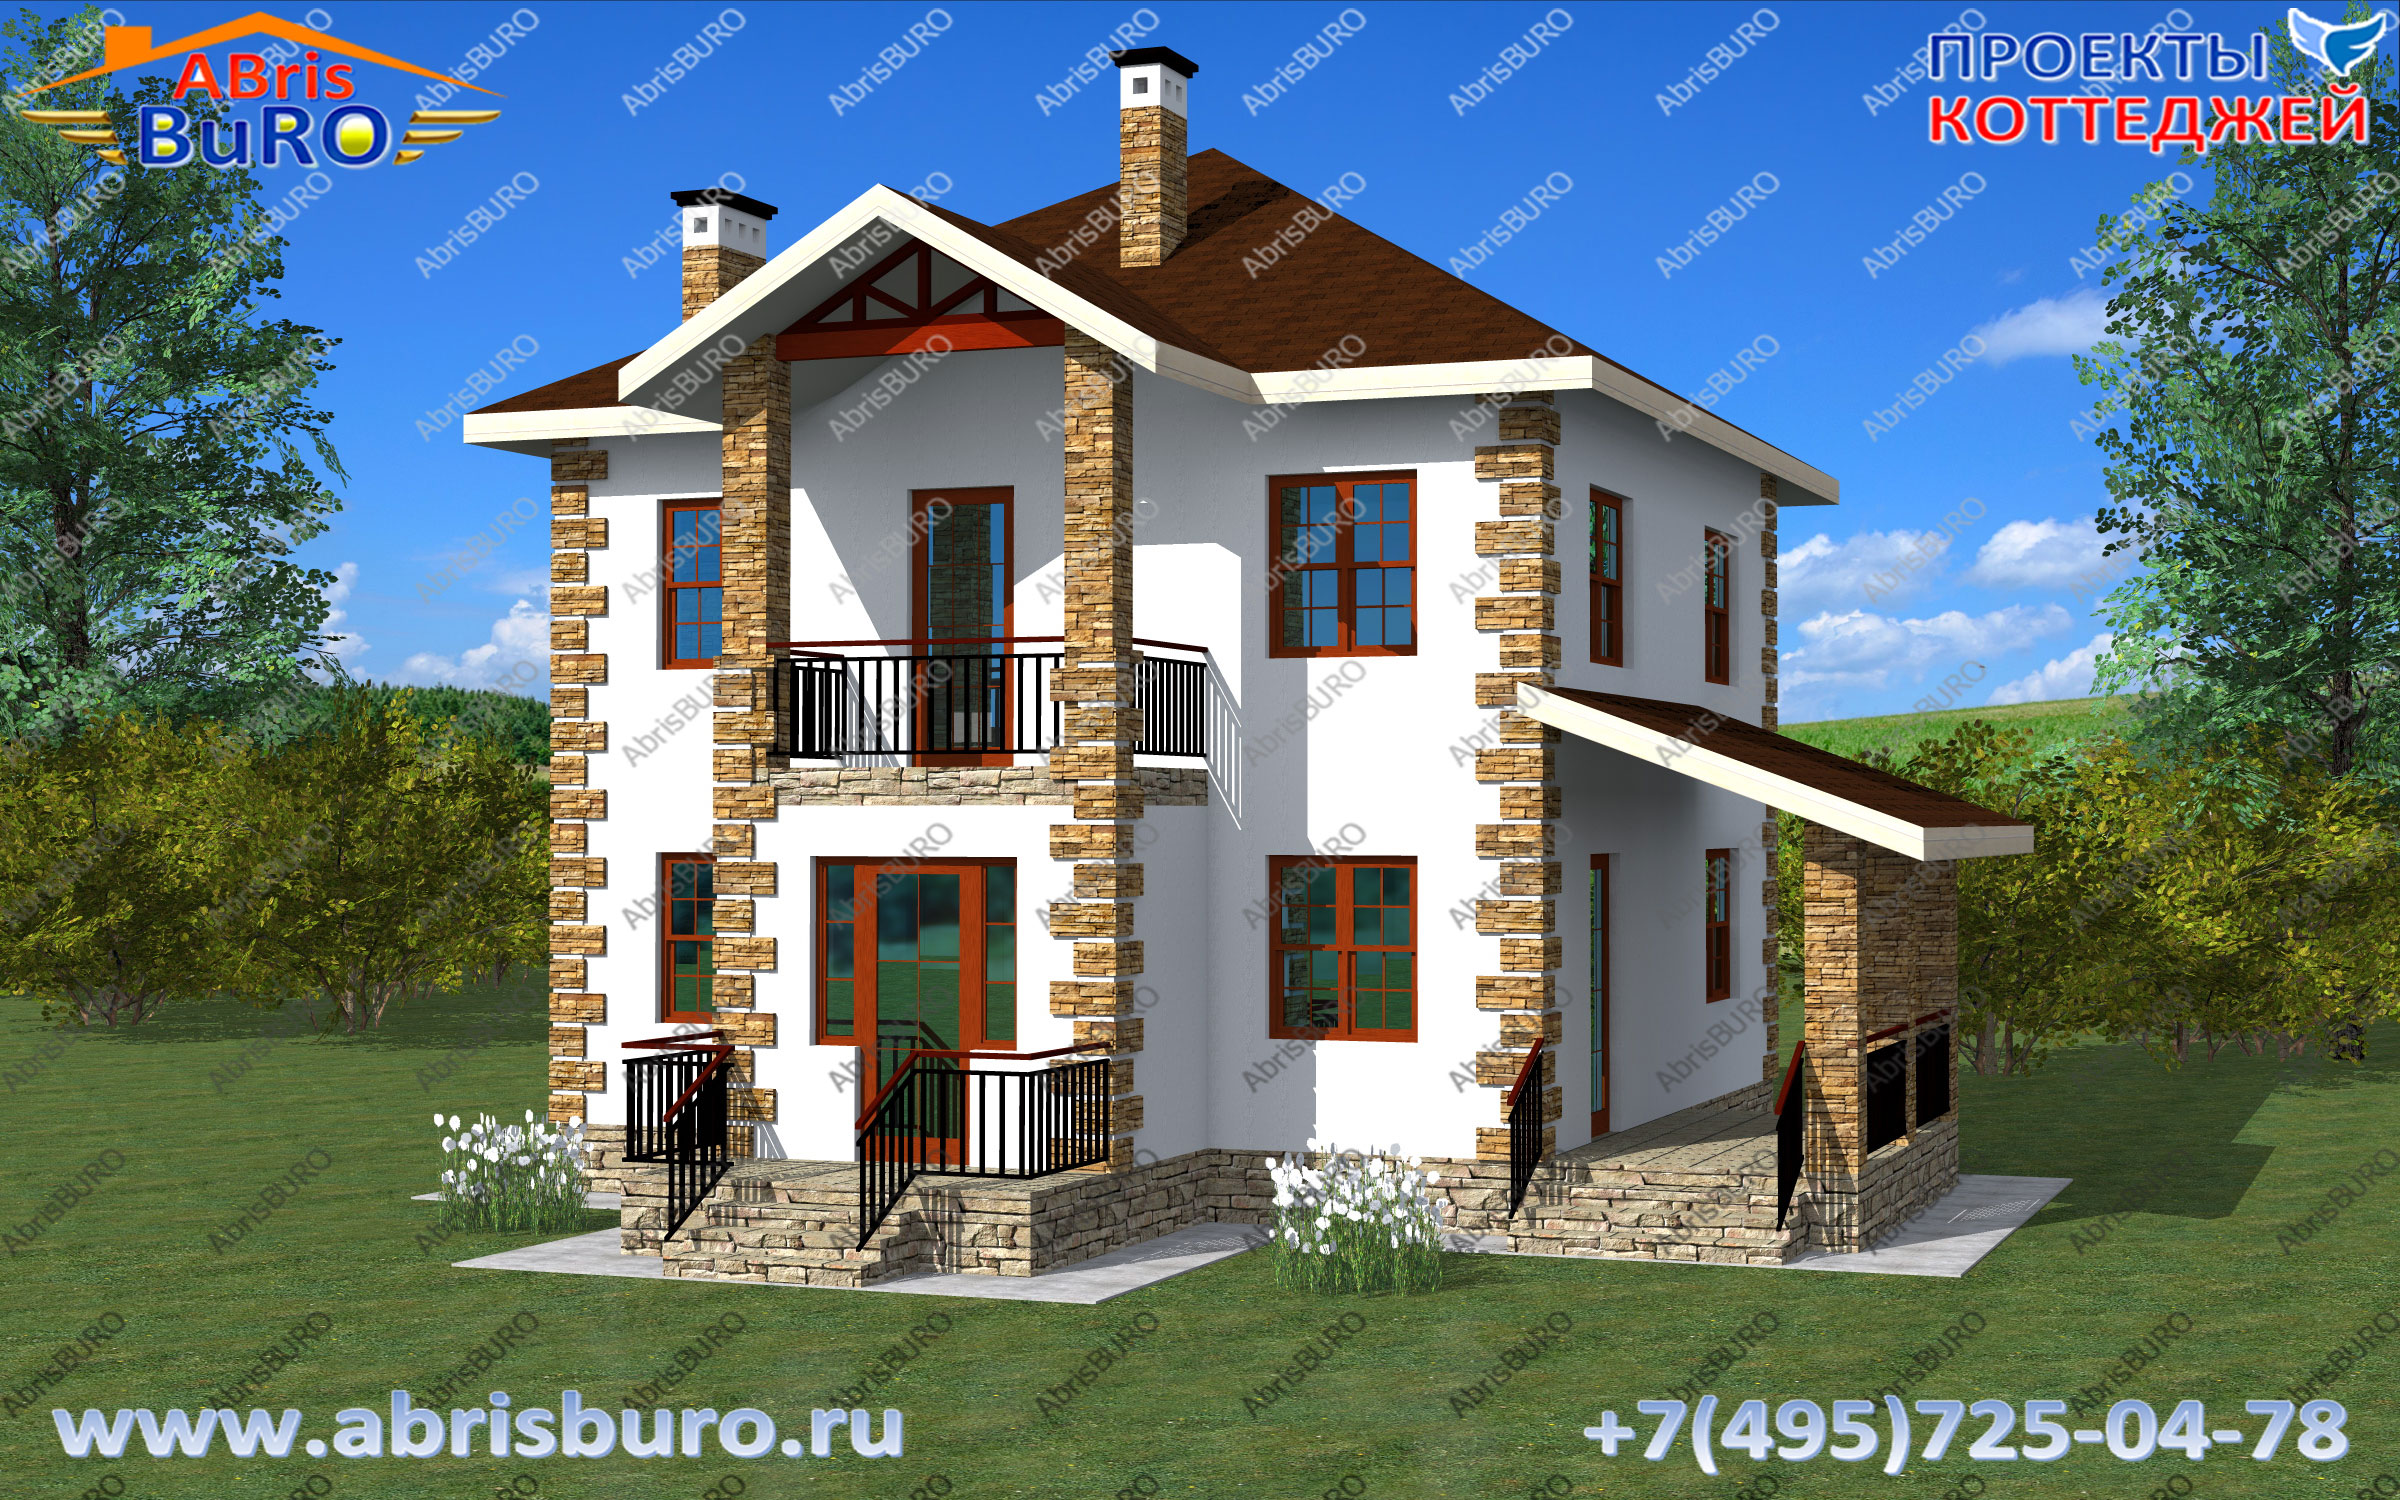 Проект небольшого 2-х этажного коттеджа K1188-124 на сайте www.abrisburo.ru. 